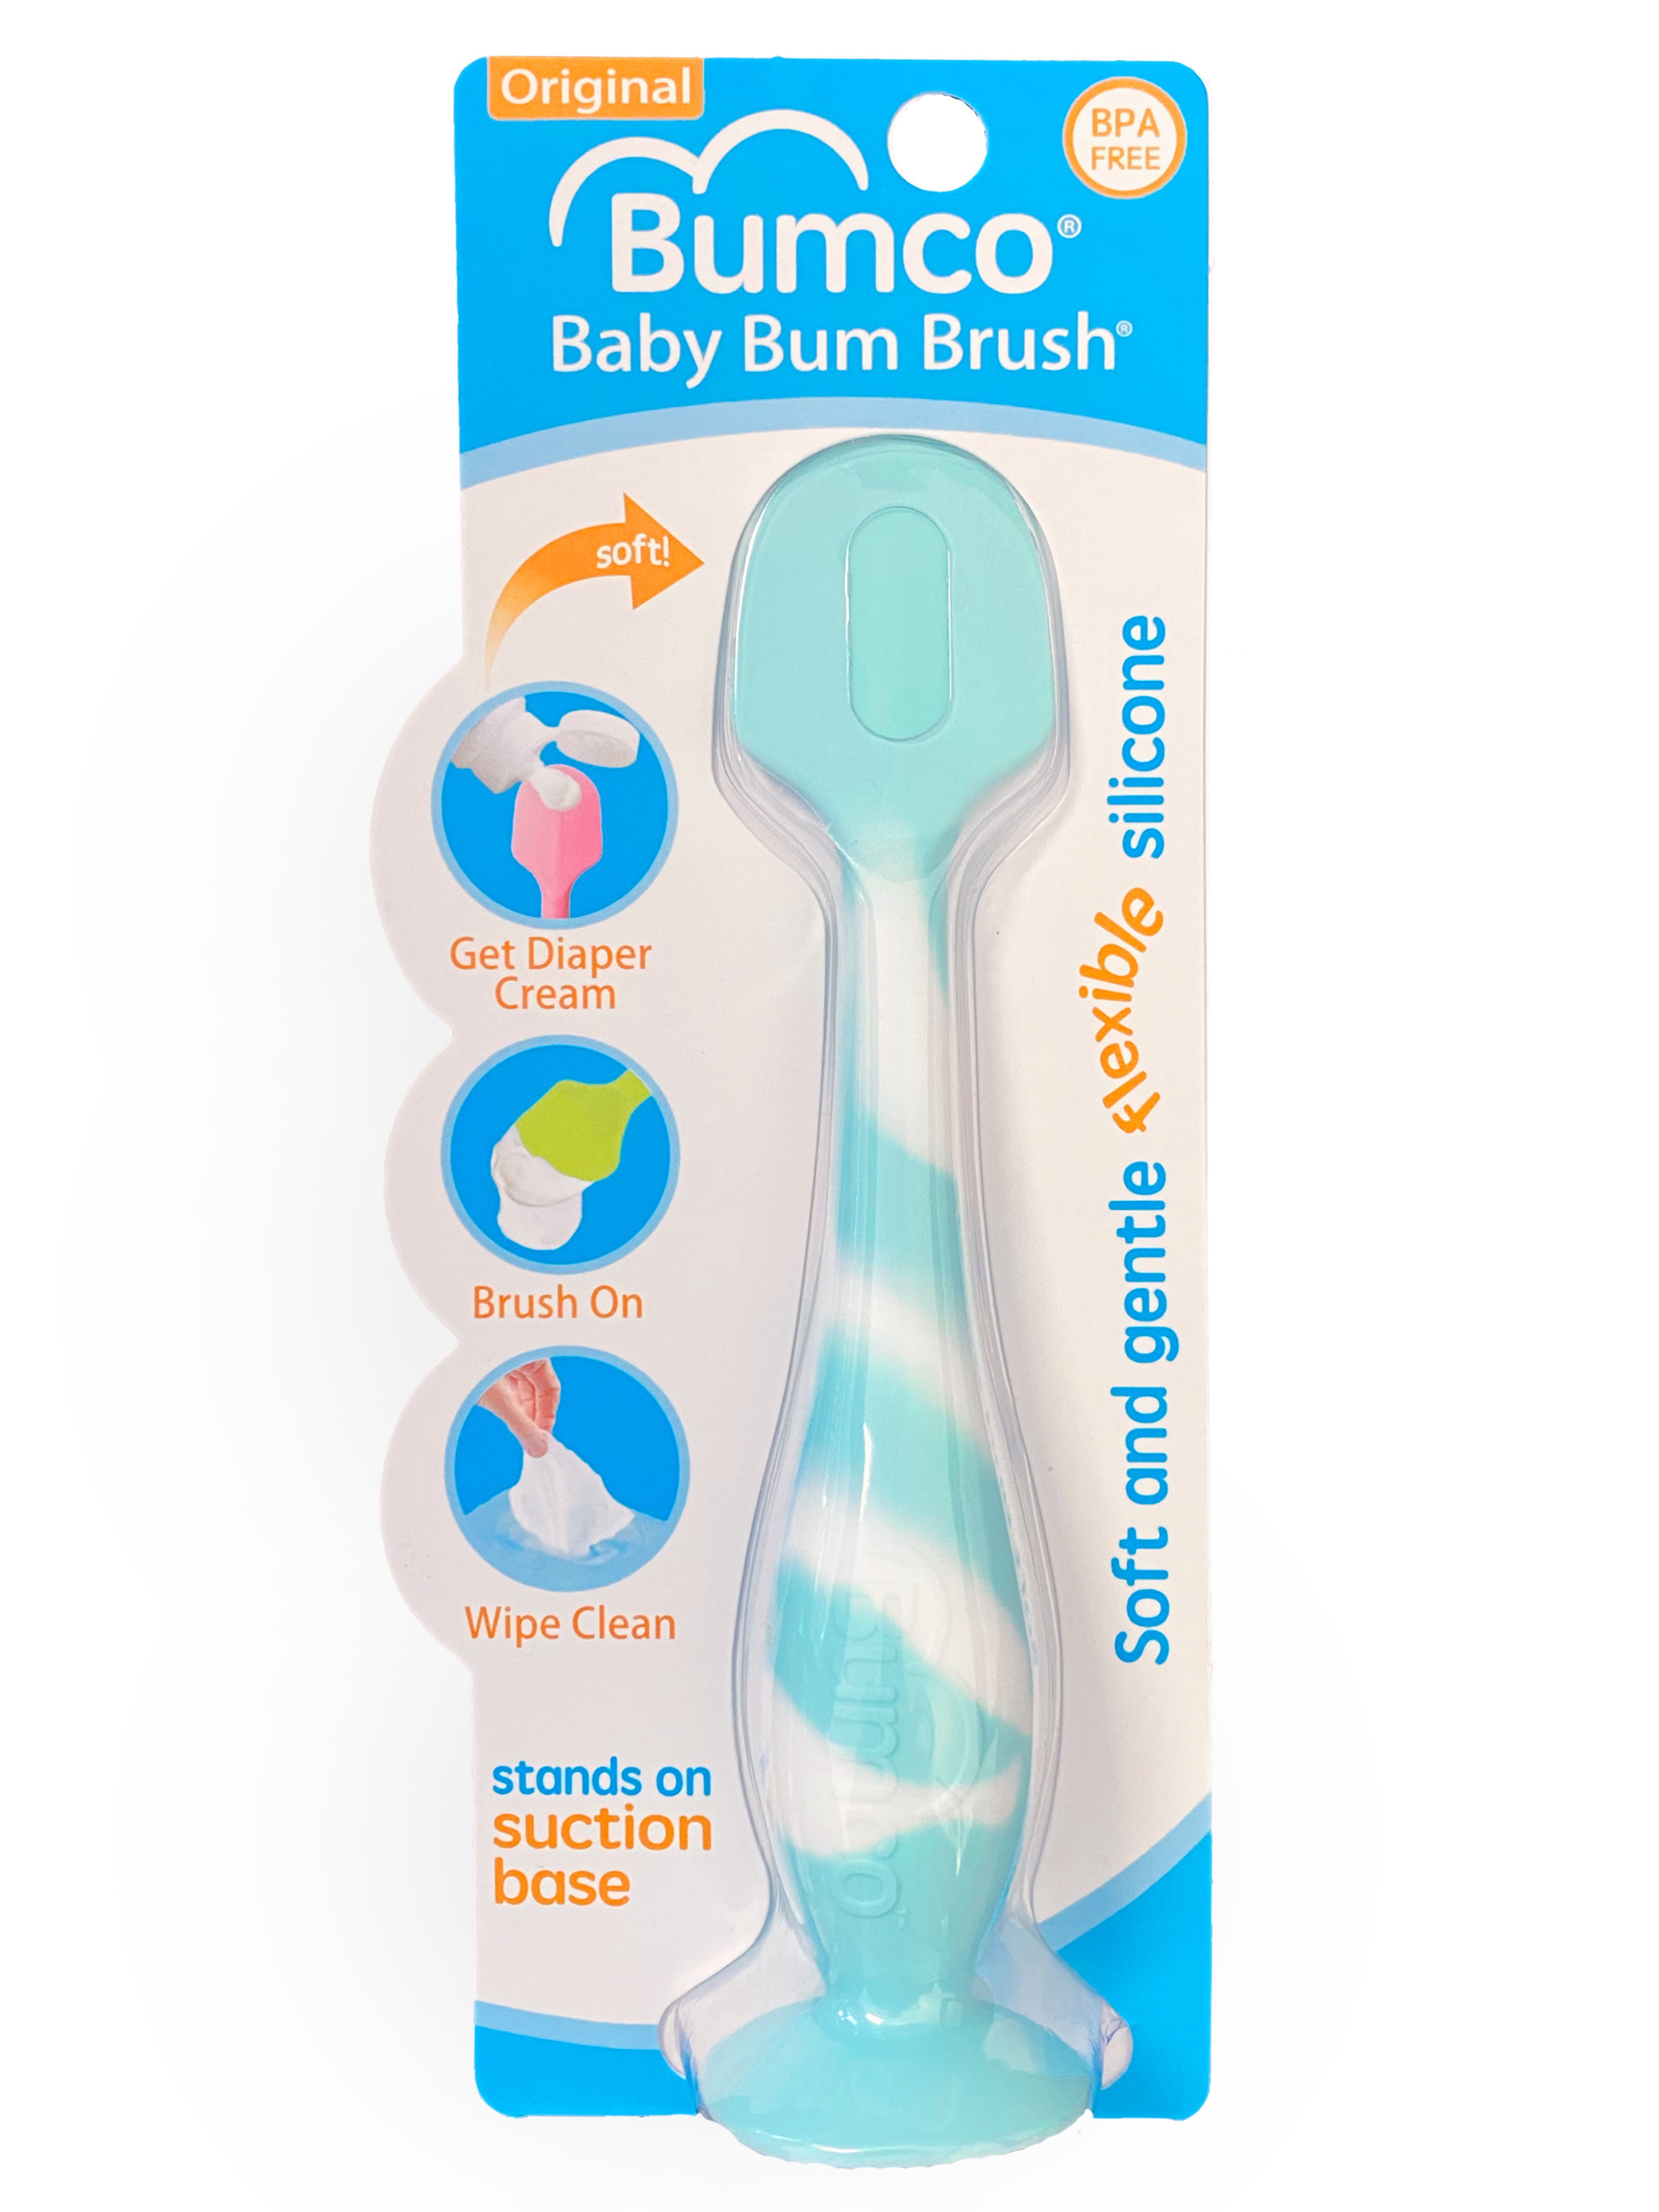 Soft Silicone Diaper Cream Applicator Green BabyBum Diaper Cream Brush 